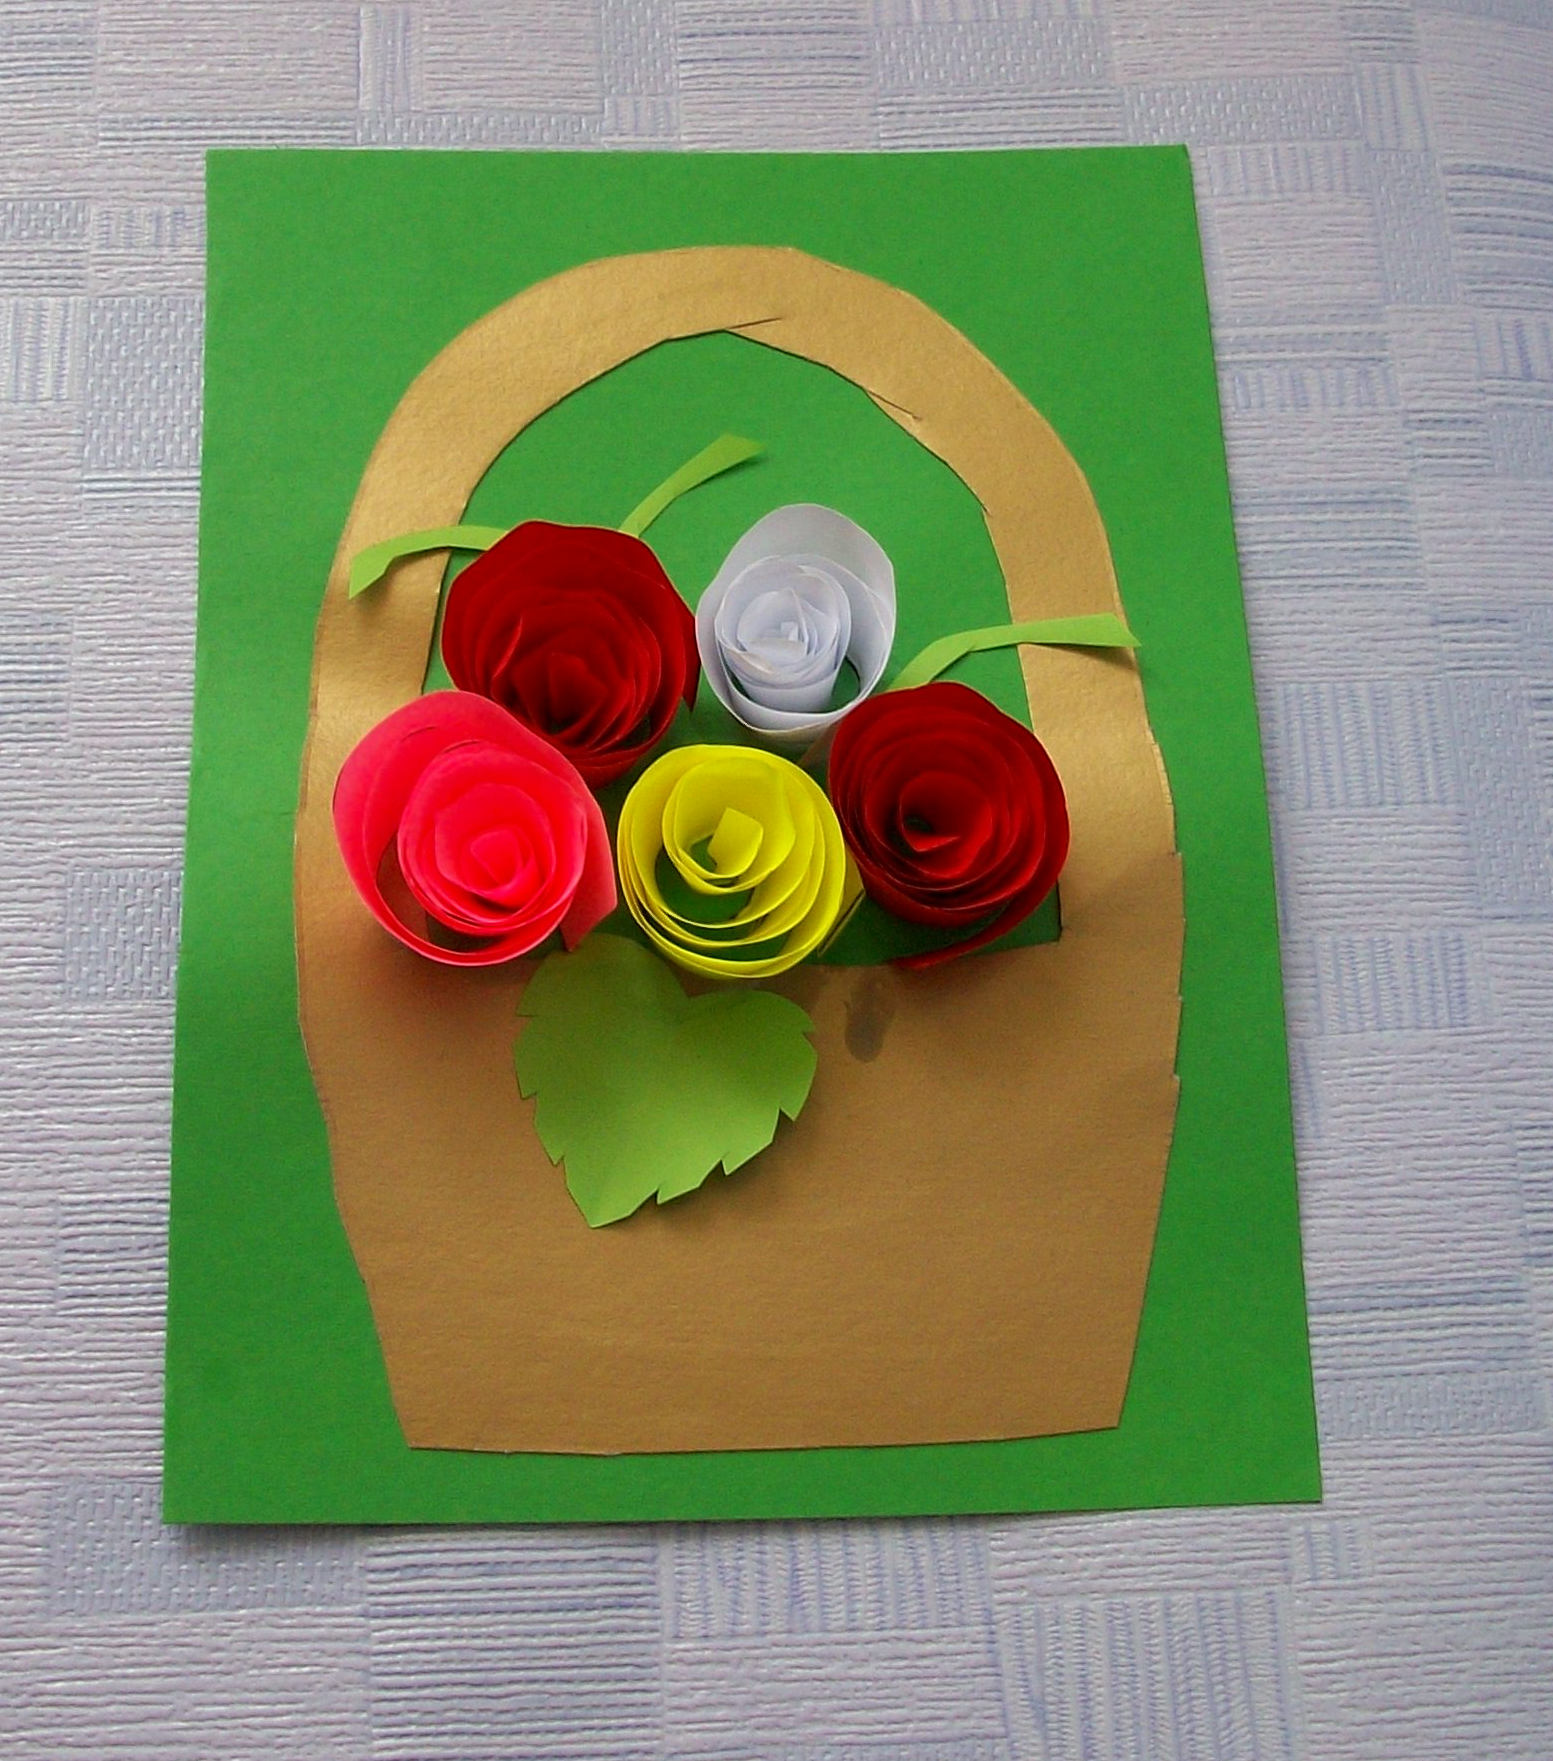 Поделки роза из бумаги на картоне идеи по изготовлению своими руками фото